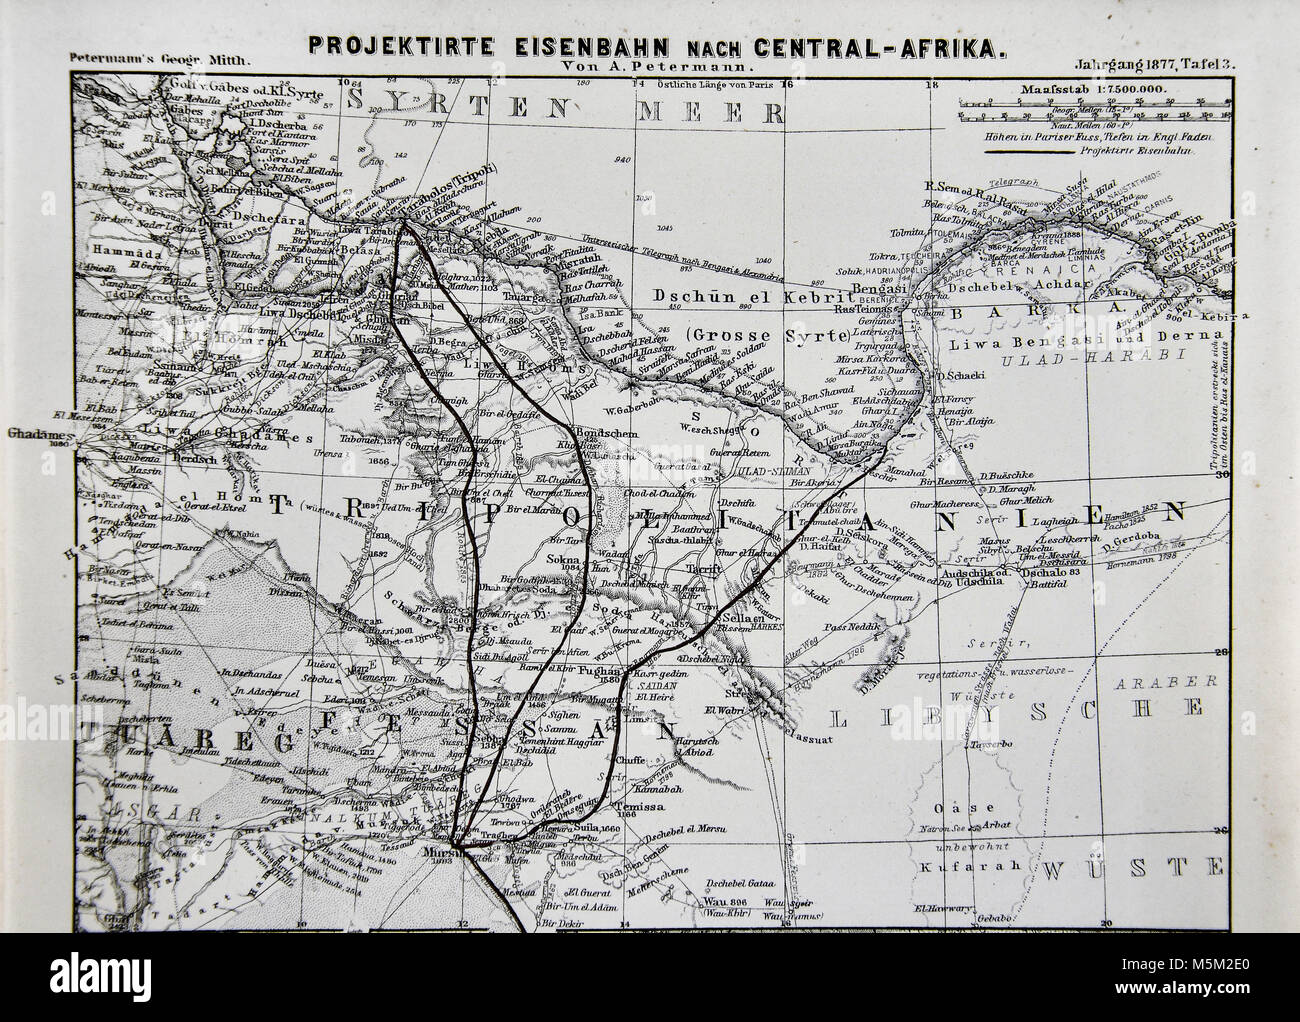 1877 Petermann Mittheilungen Map - Central Africa Railroads Stock Photo